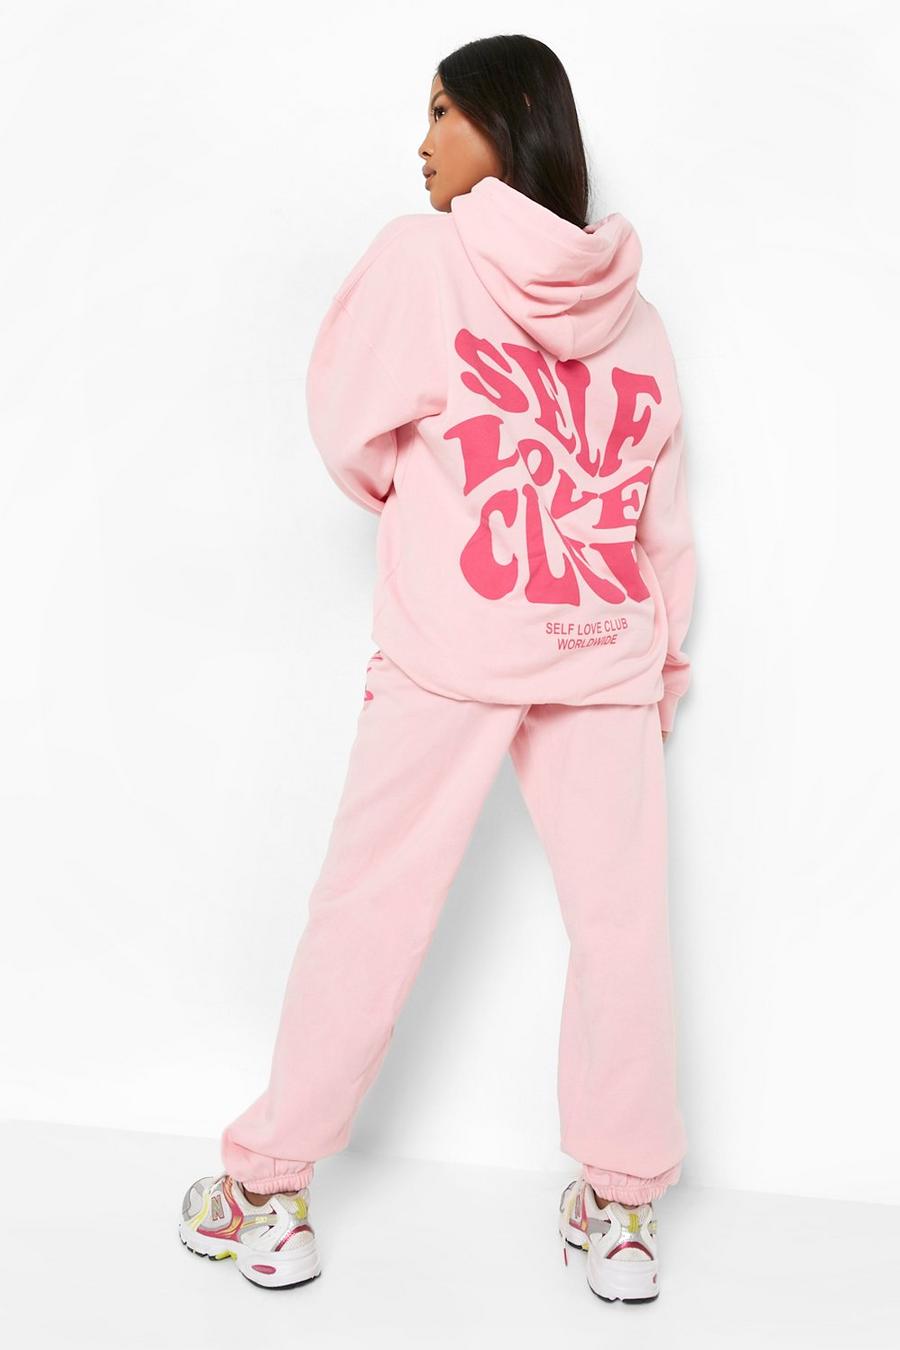 Petite Trainingsanzug mit Self Love Club Print, Light pink